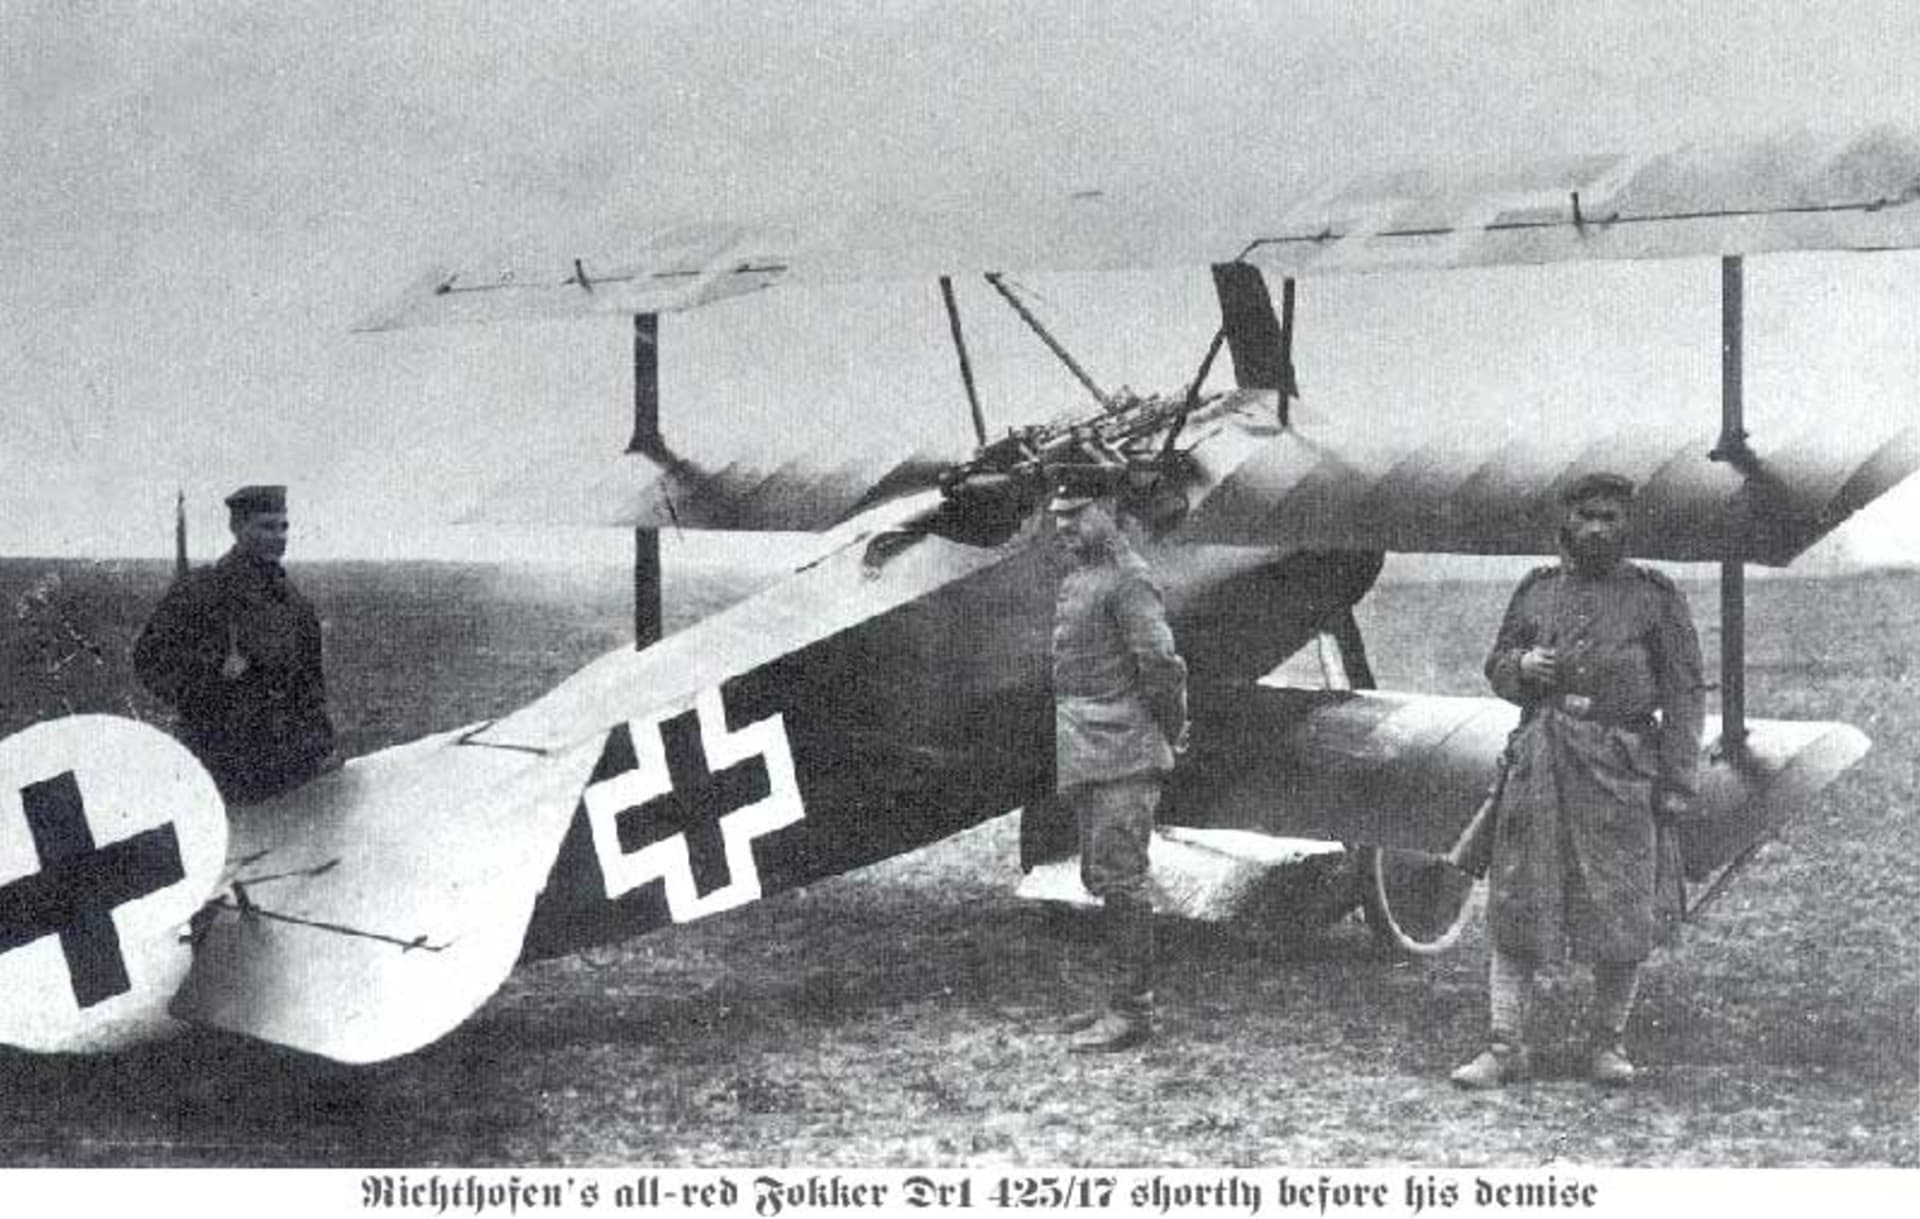 Fokker Dr. I. Manfreda von Richthofena